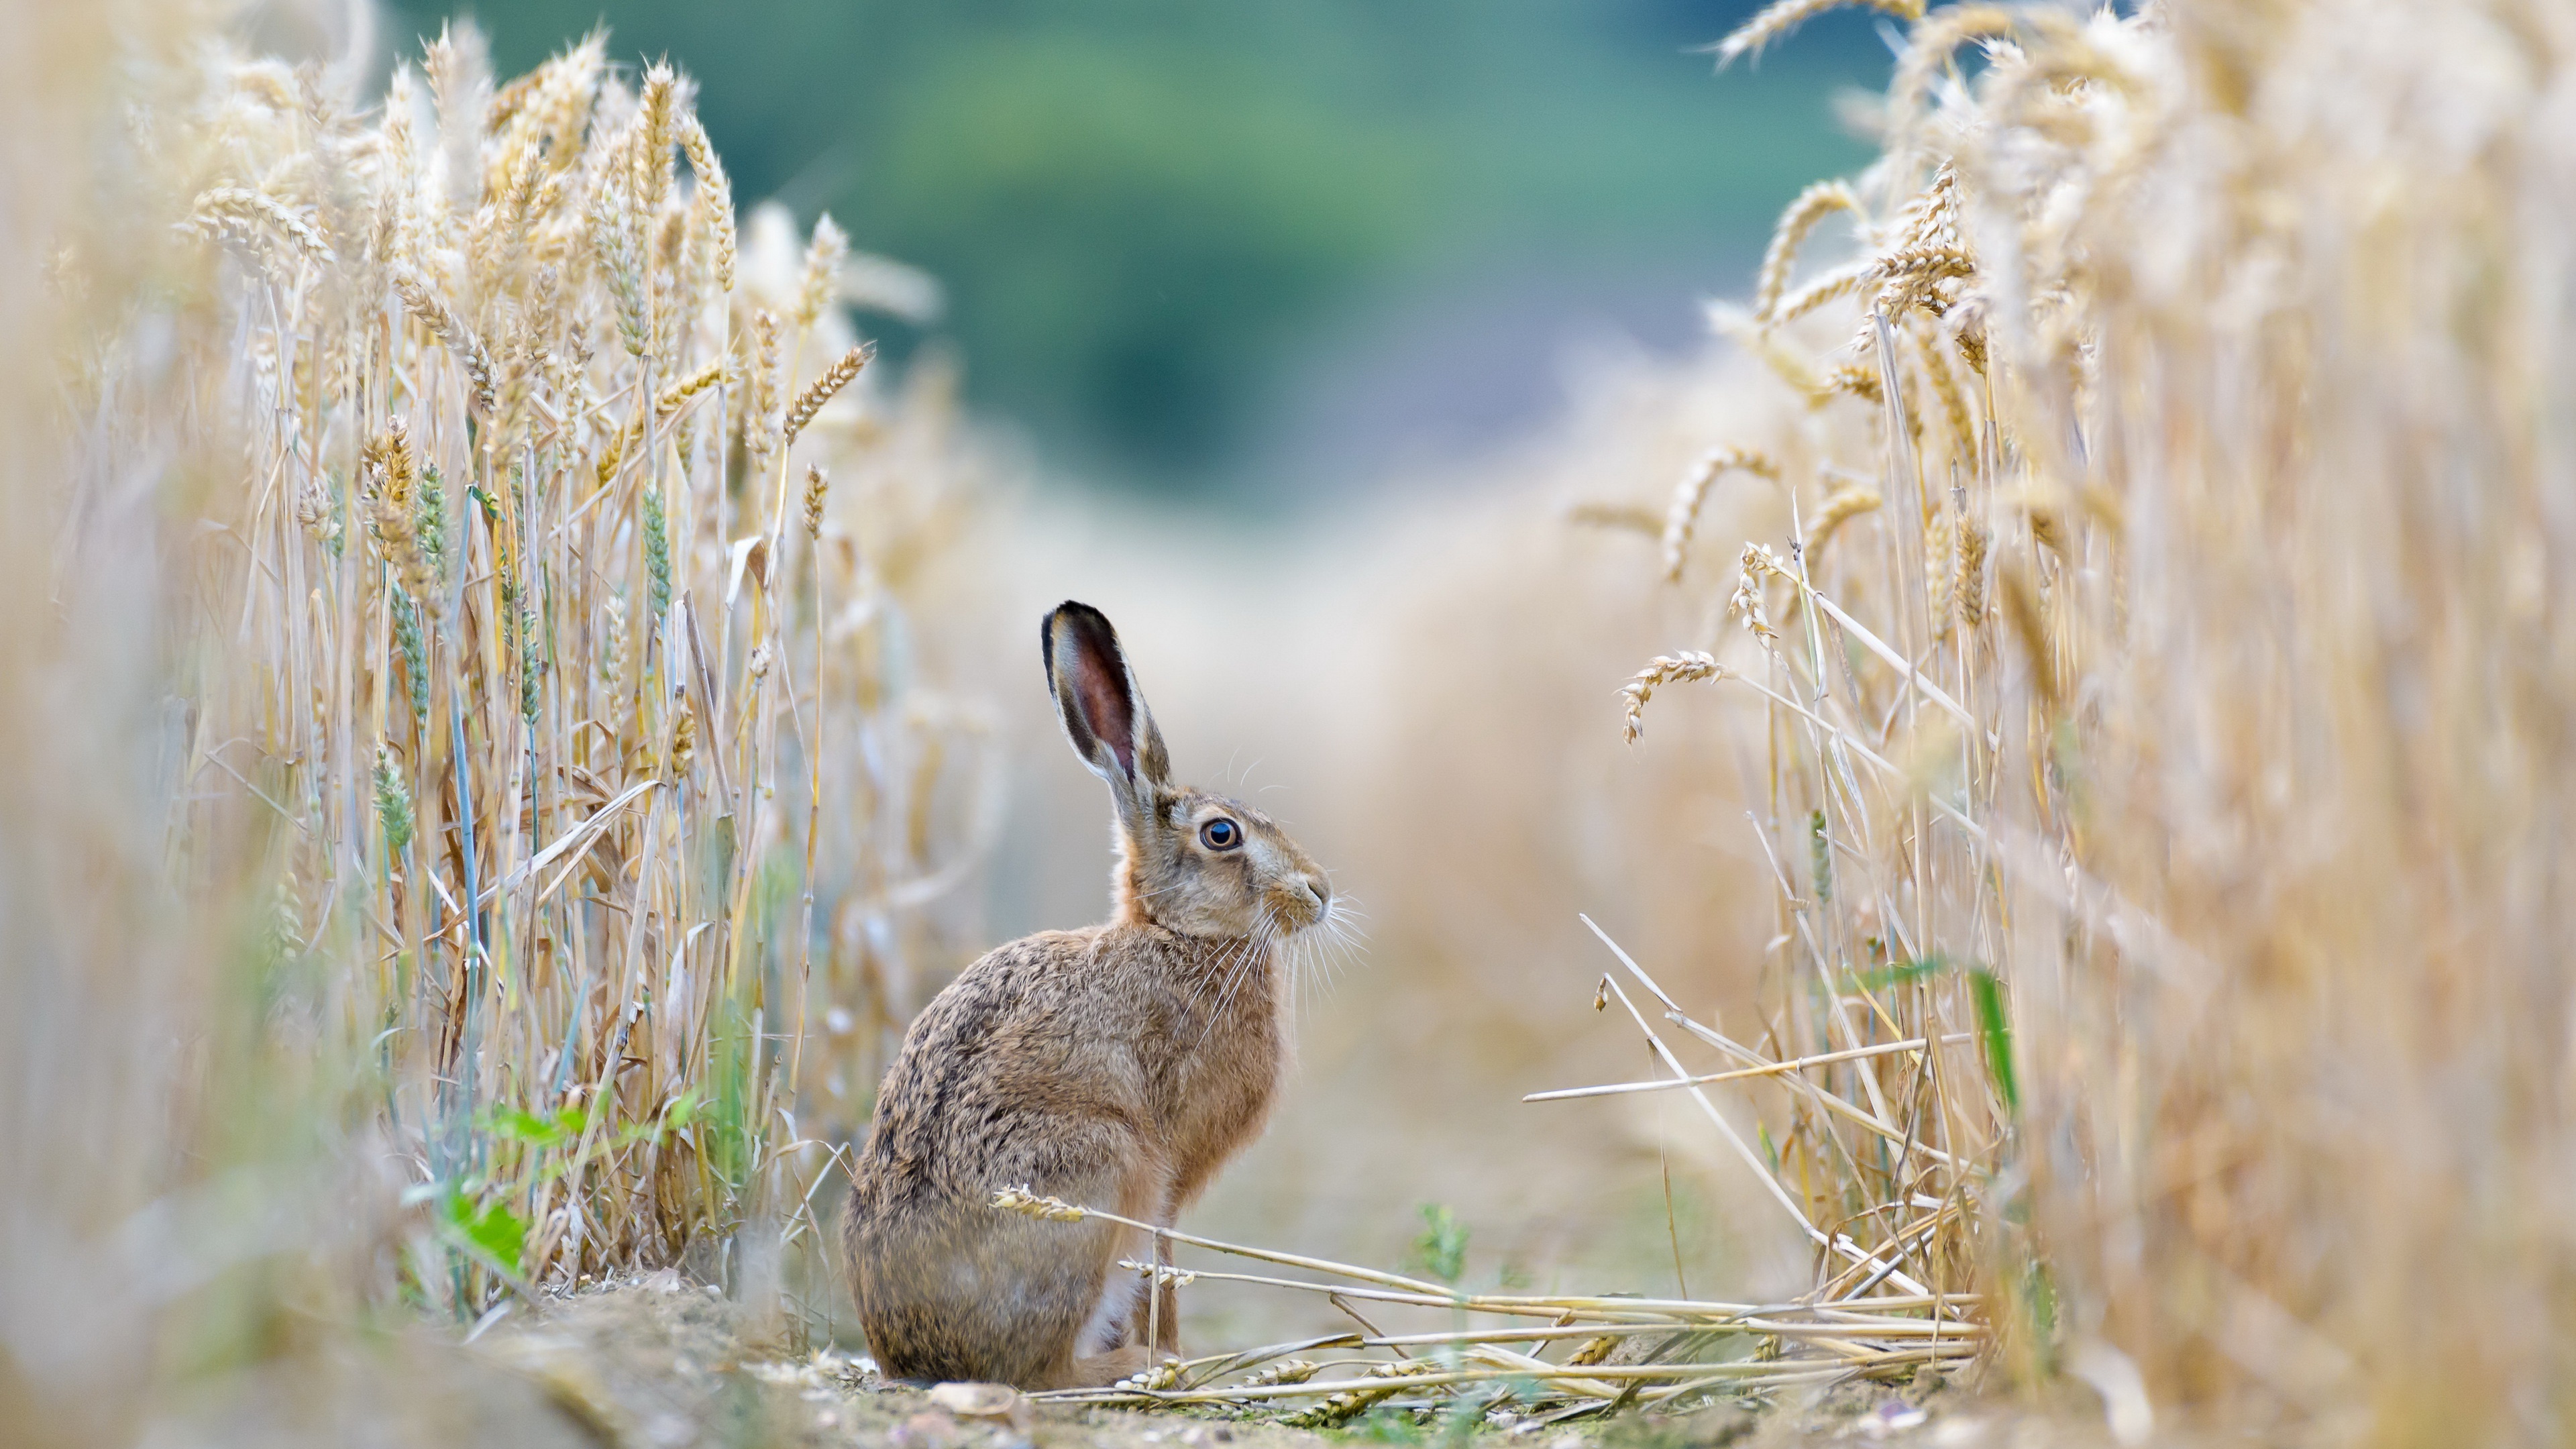 Rabbits in nature, Mammals in the outdoors, Beautiful plants, Nature's wallpaper, 3840x2160 4K Desktop